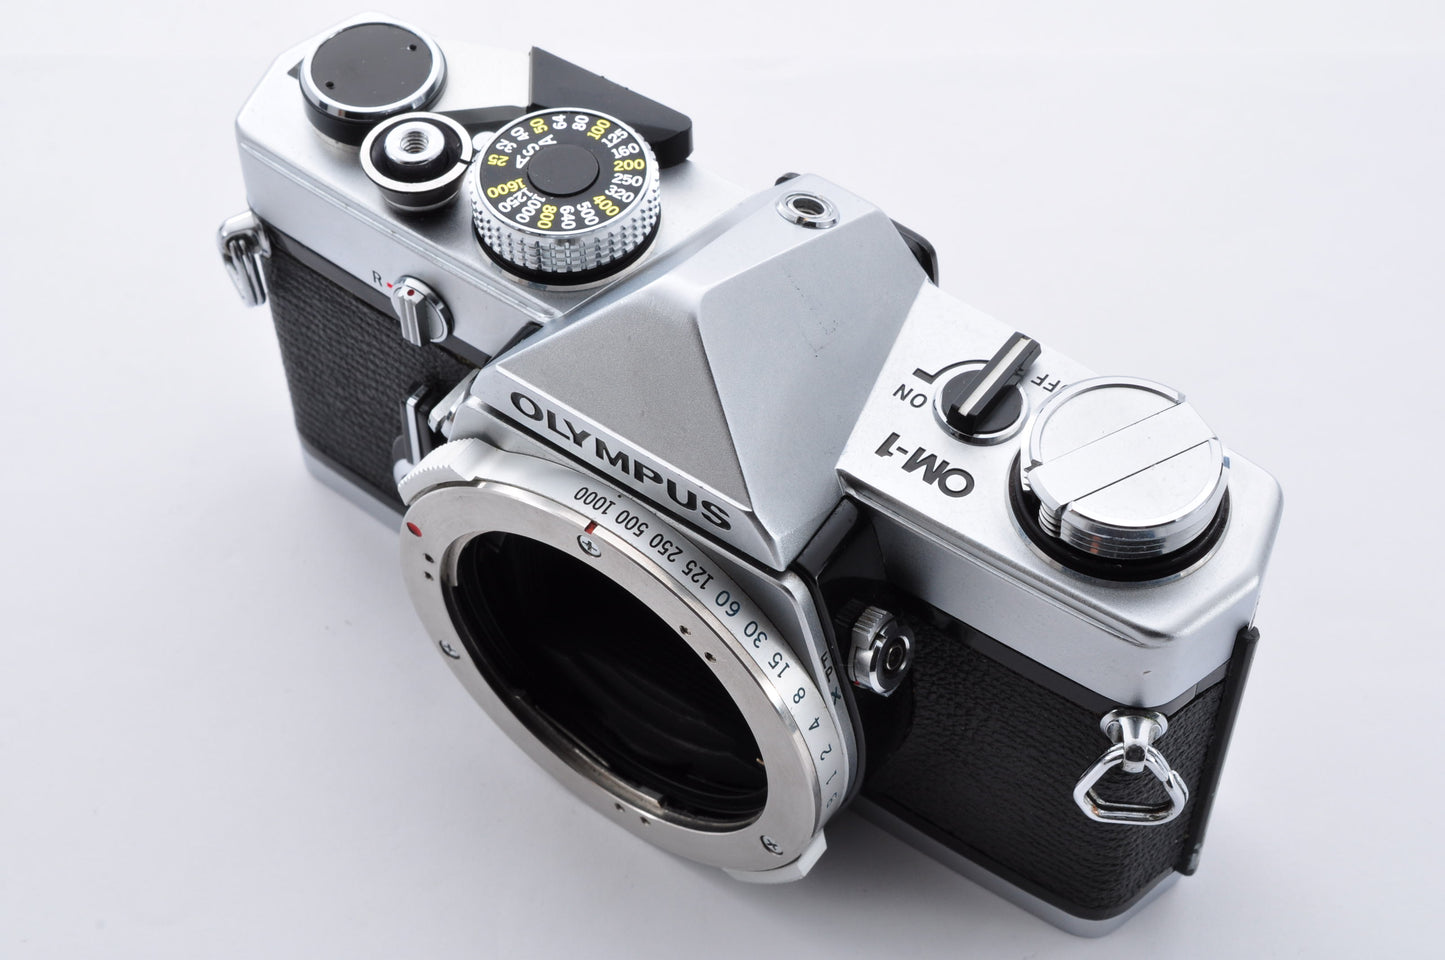 Olympus OM-1 Silver Early model om 1 SLR 35mm Film Camera Body Only  From Japan #207345